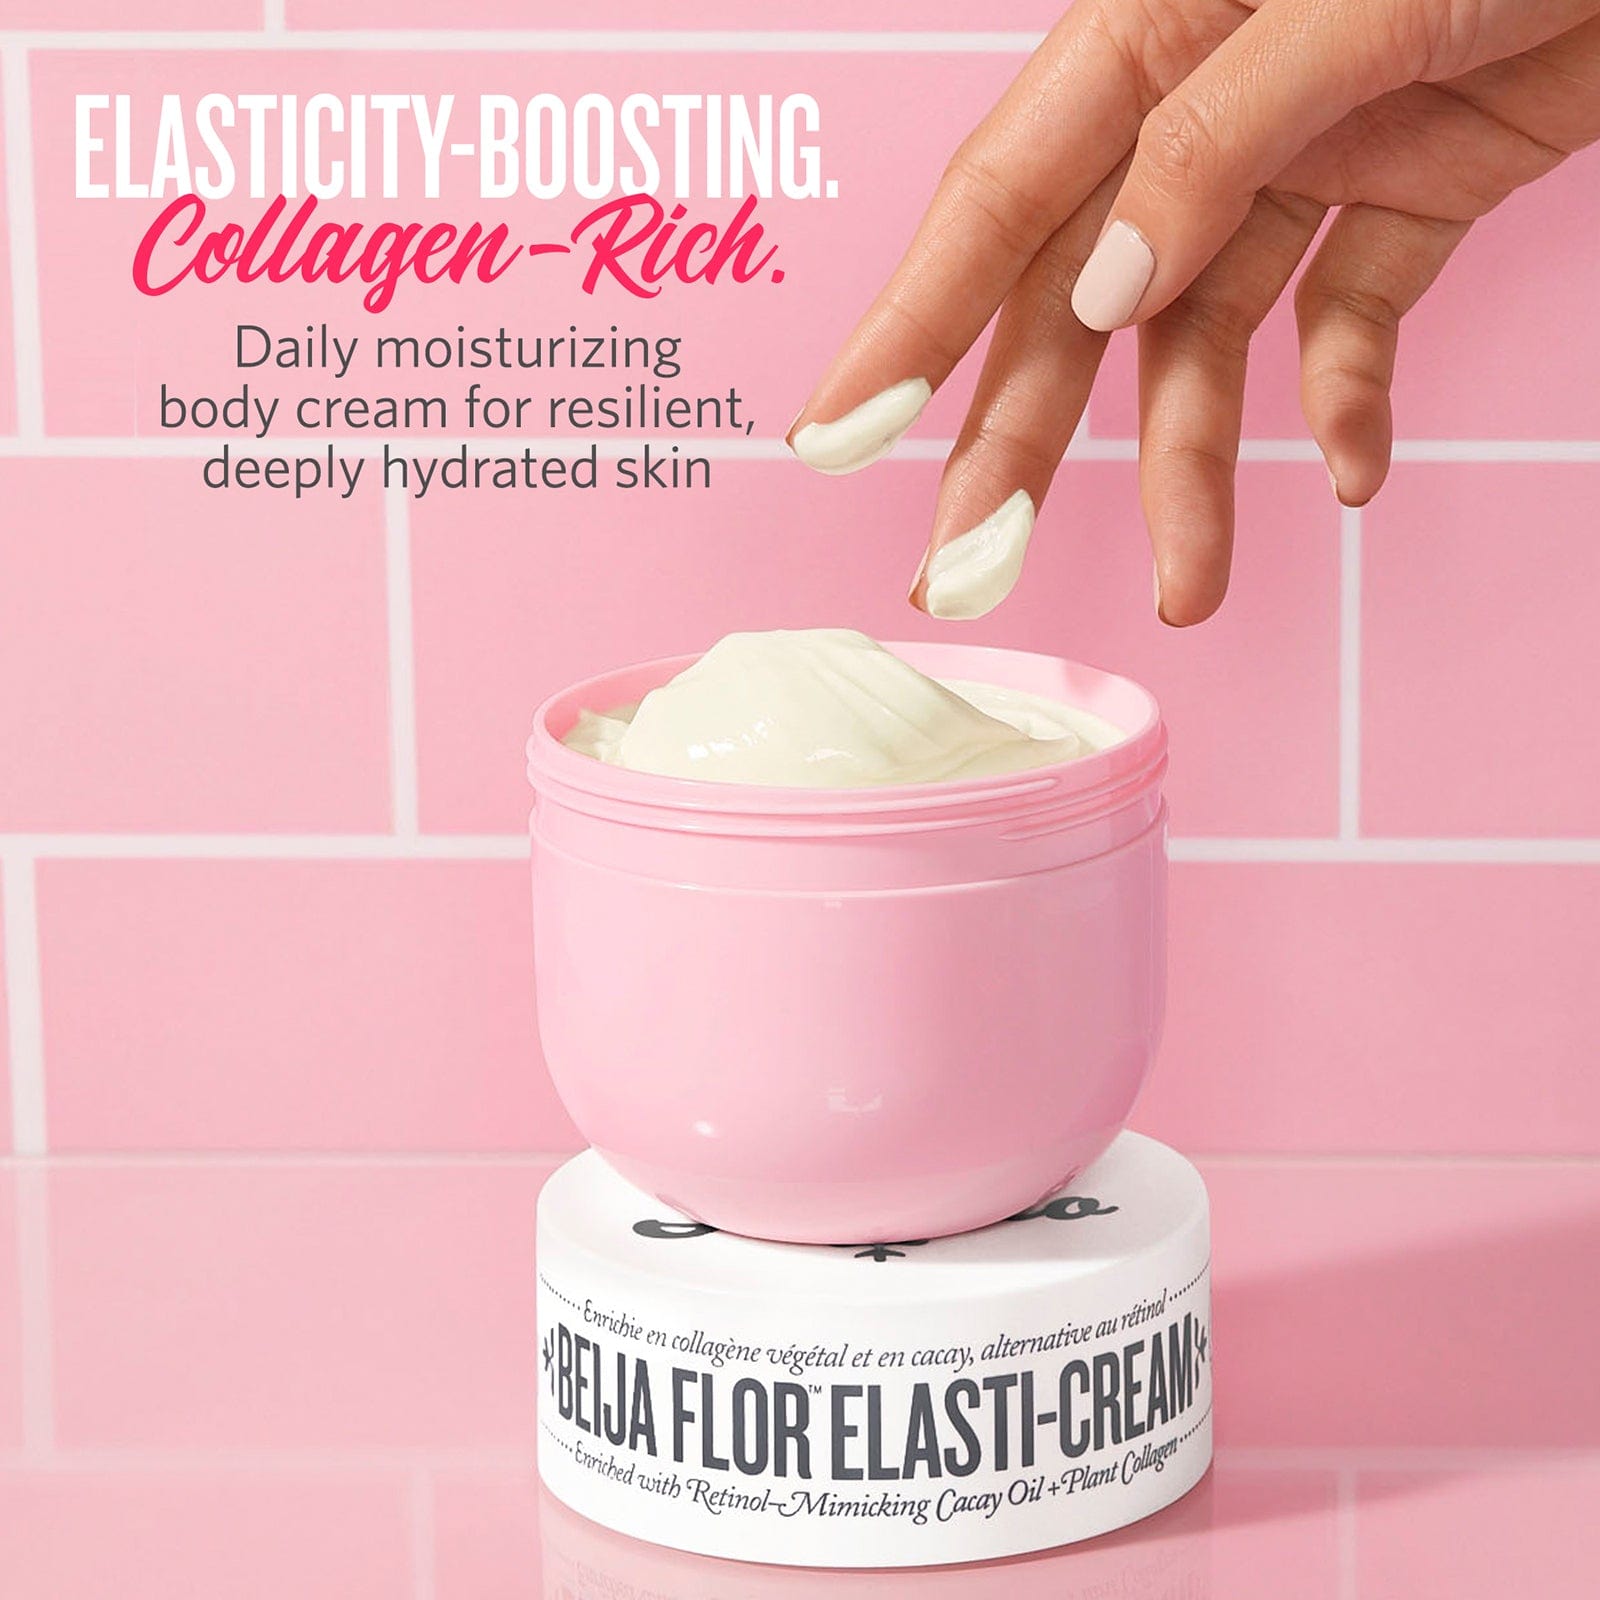 Elasticity-boosting Collagen-rich. Daily moisturizing body cream for resilient, deeply hydrated skin | Beija flor elasti-cream | Sol de Janeiro